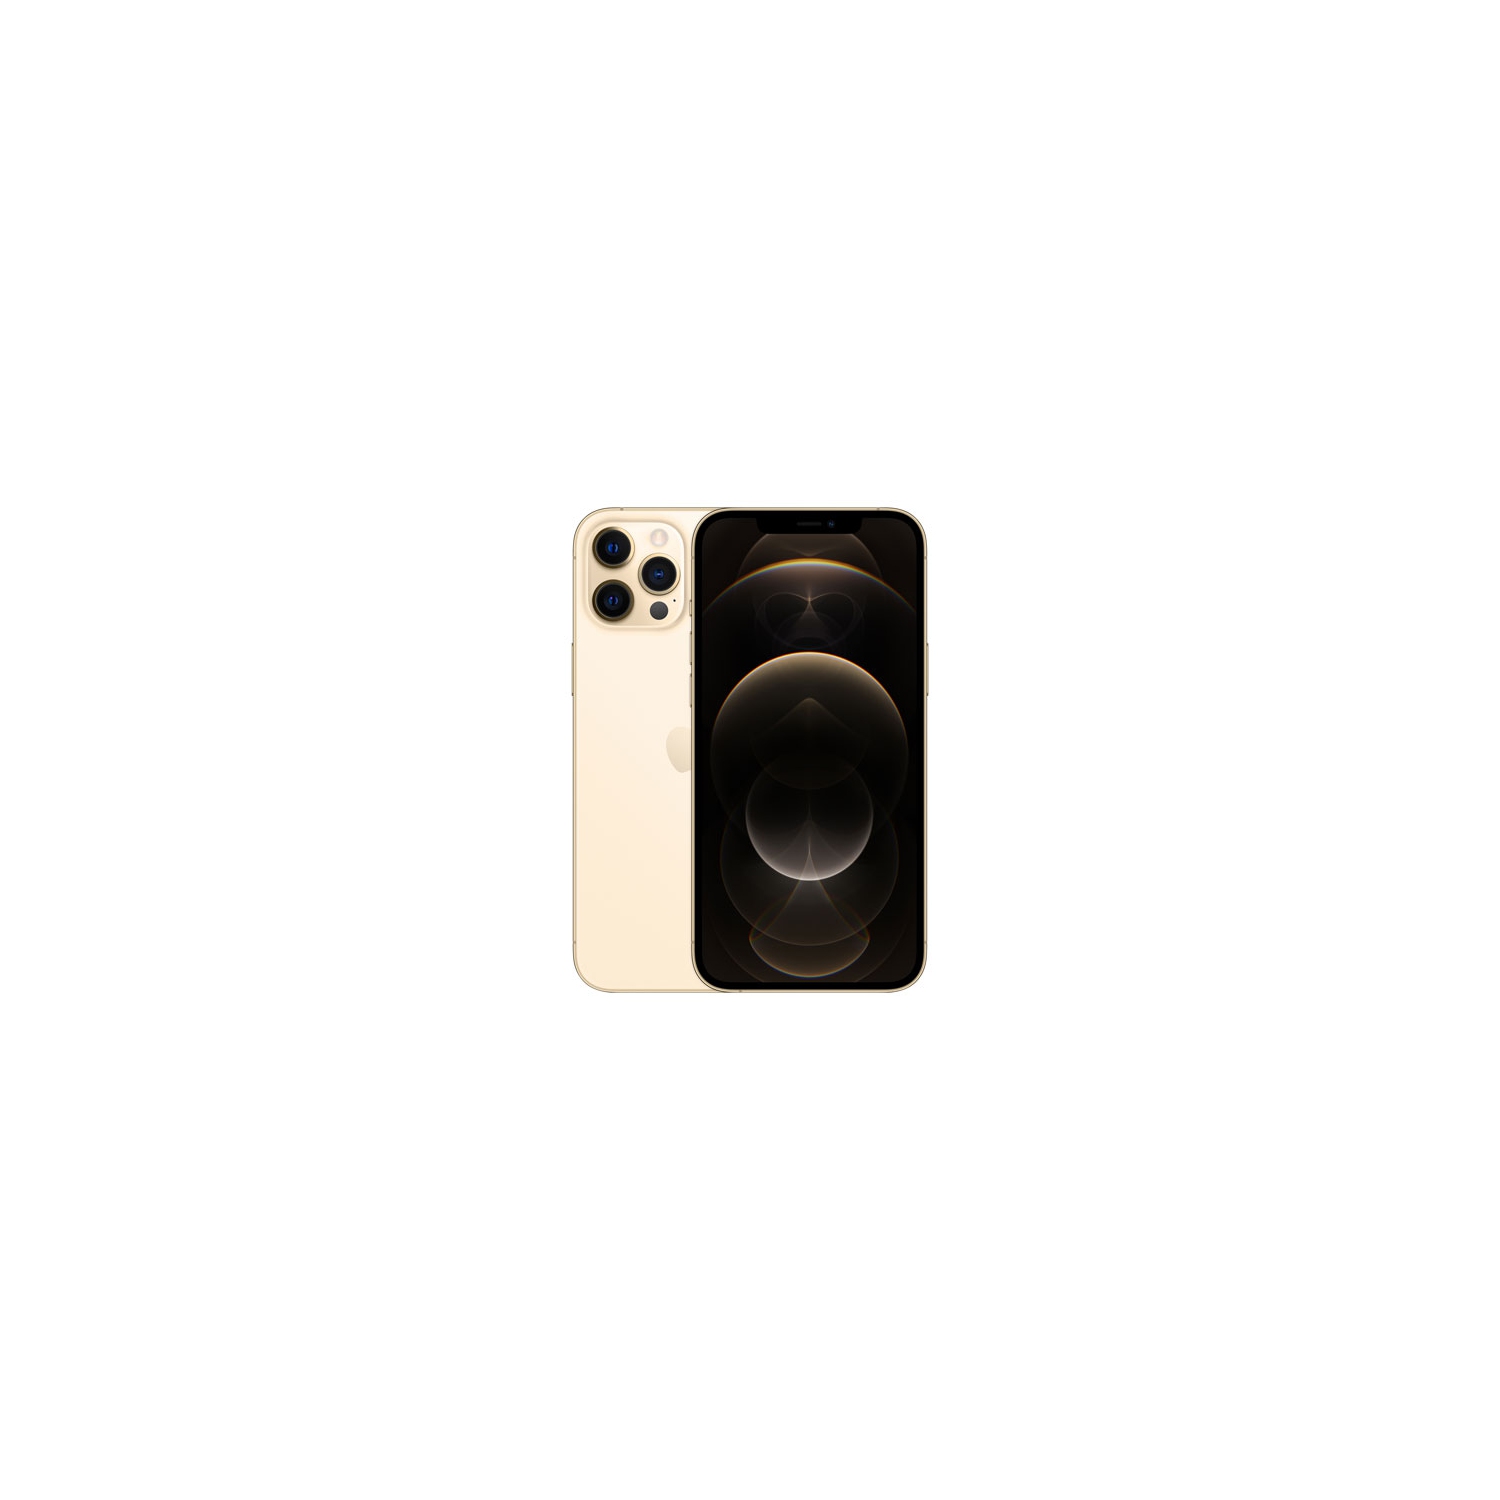 Refurbished (Good) - Apple iPhone 12 Pro Max 256GB - Gold - Unlocked